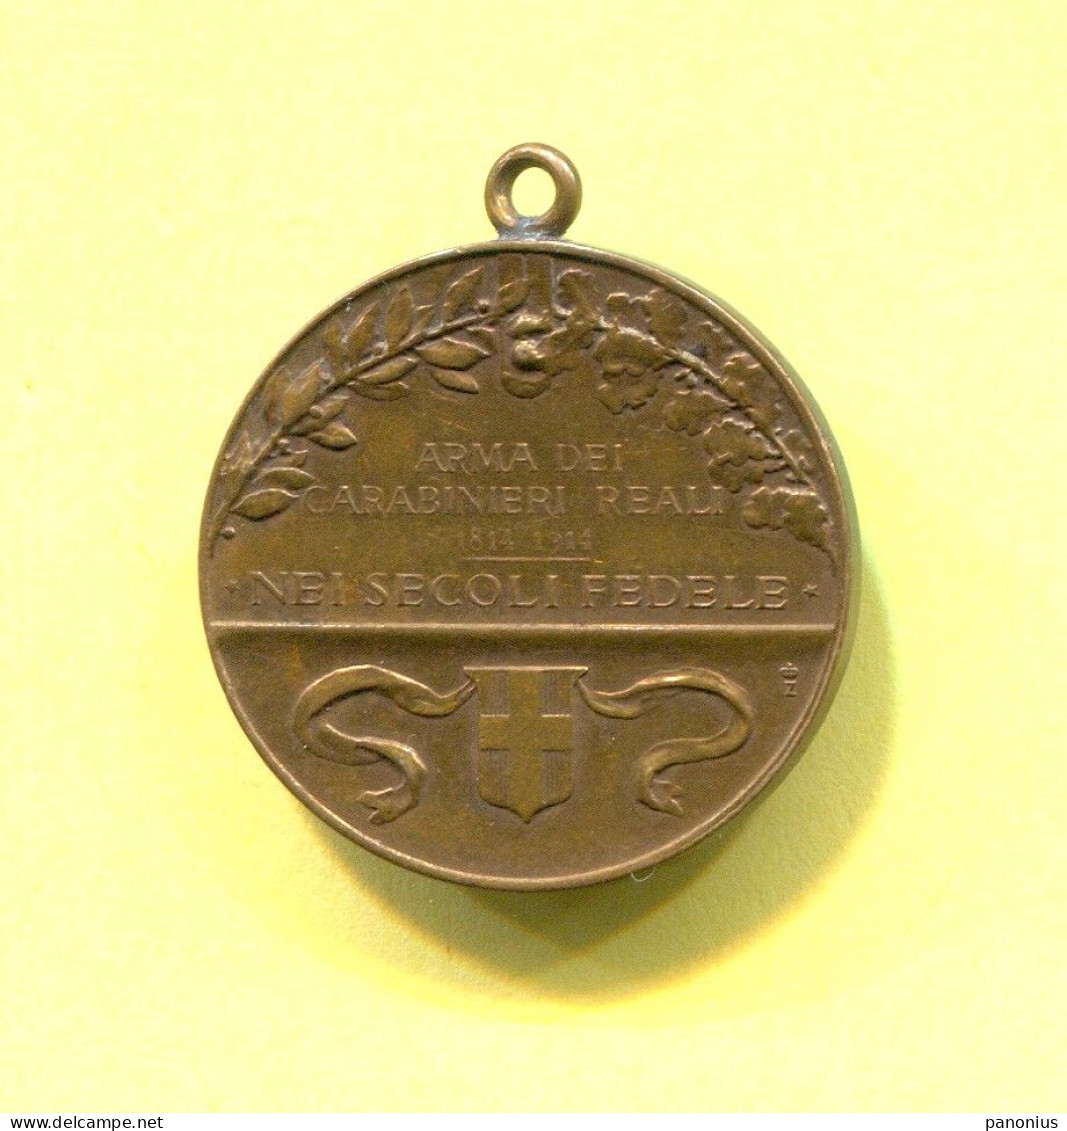 Kingdom Of Italy - Vittorio Emanuele I & III, Arma Dei Carabinieri Reali 1814 - 1914, Medal By E. Tadolini - Italy